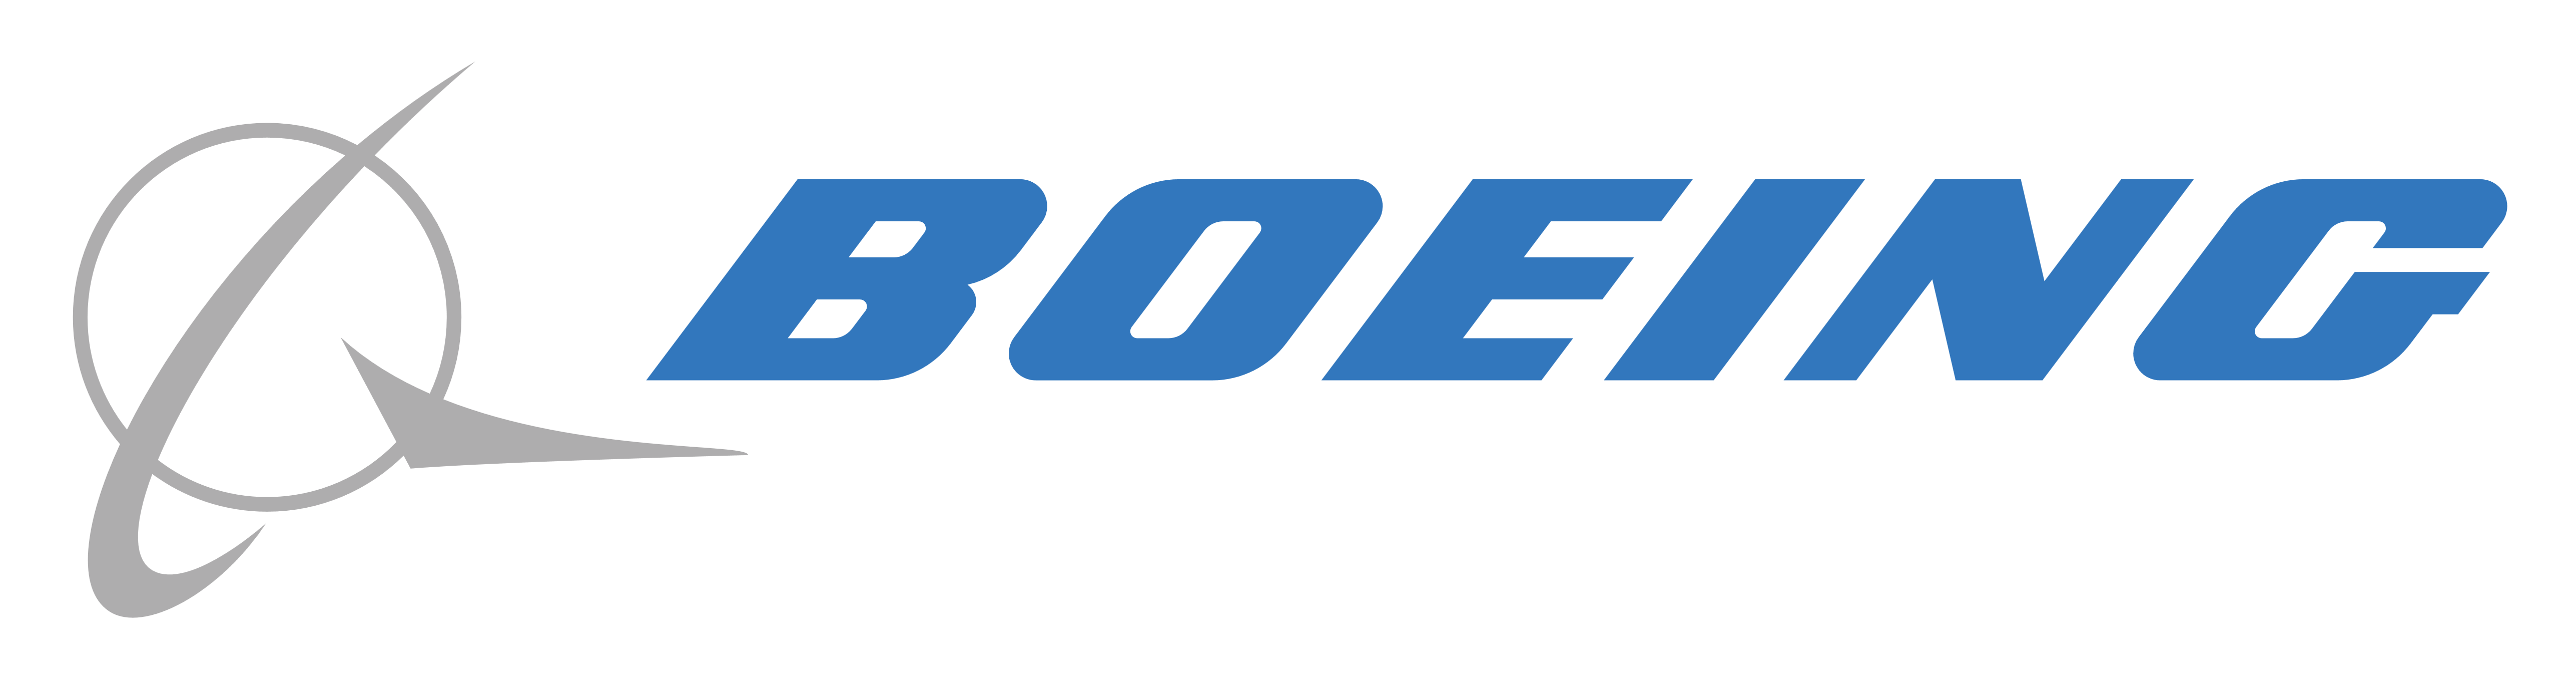 Free Boeing Logo Png Images |